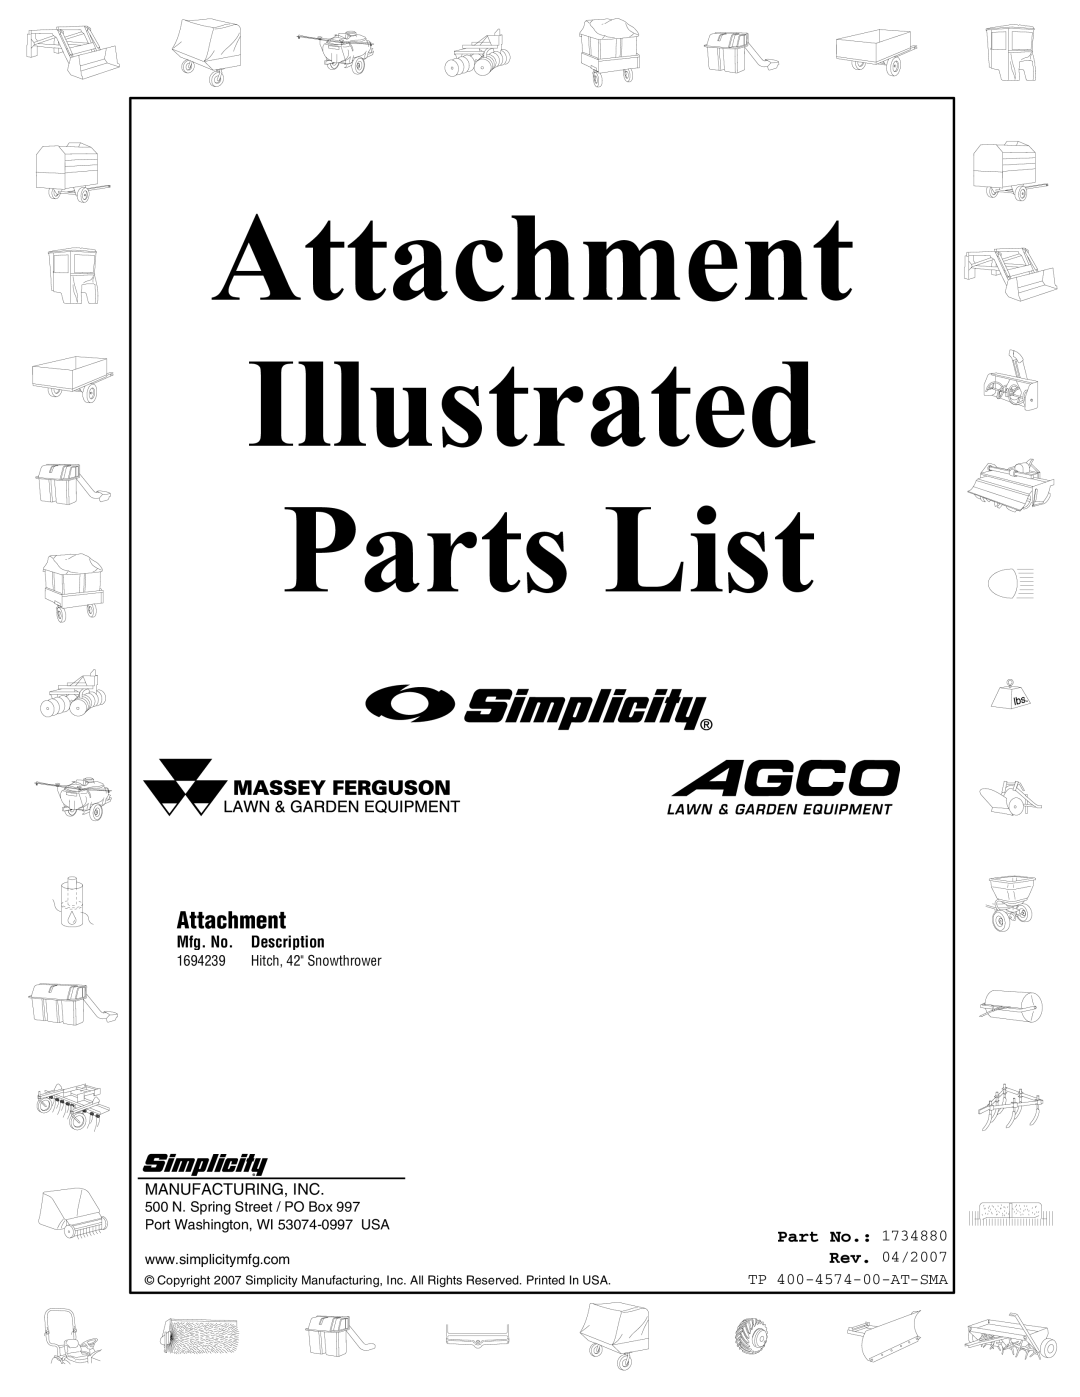 Snapper manual Attachment, Mfg. No, Description, Illustrated, Parts List, Rev. 04/2007, TP 400-4574-00-AT-SMA 